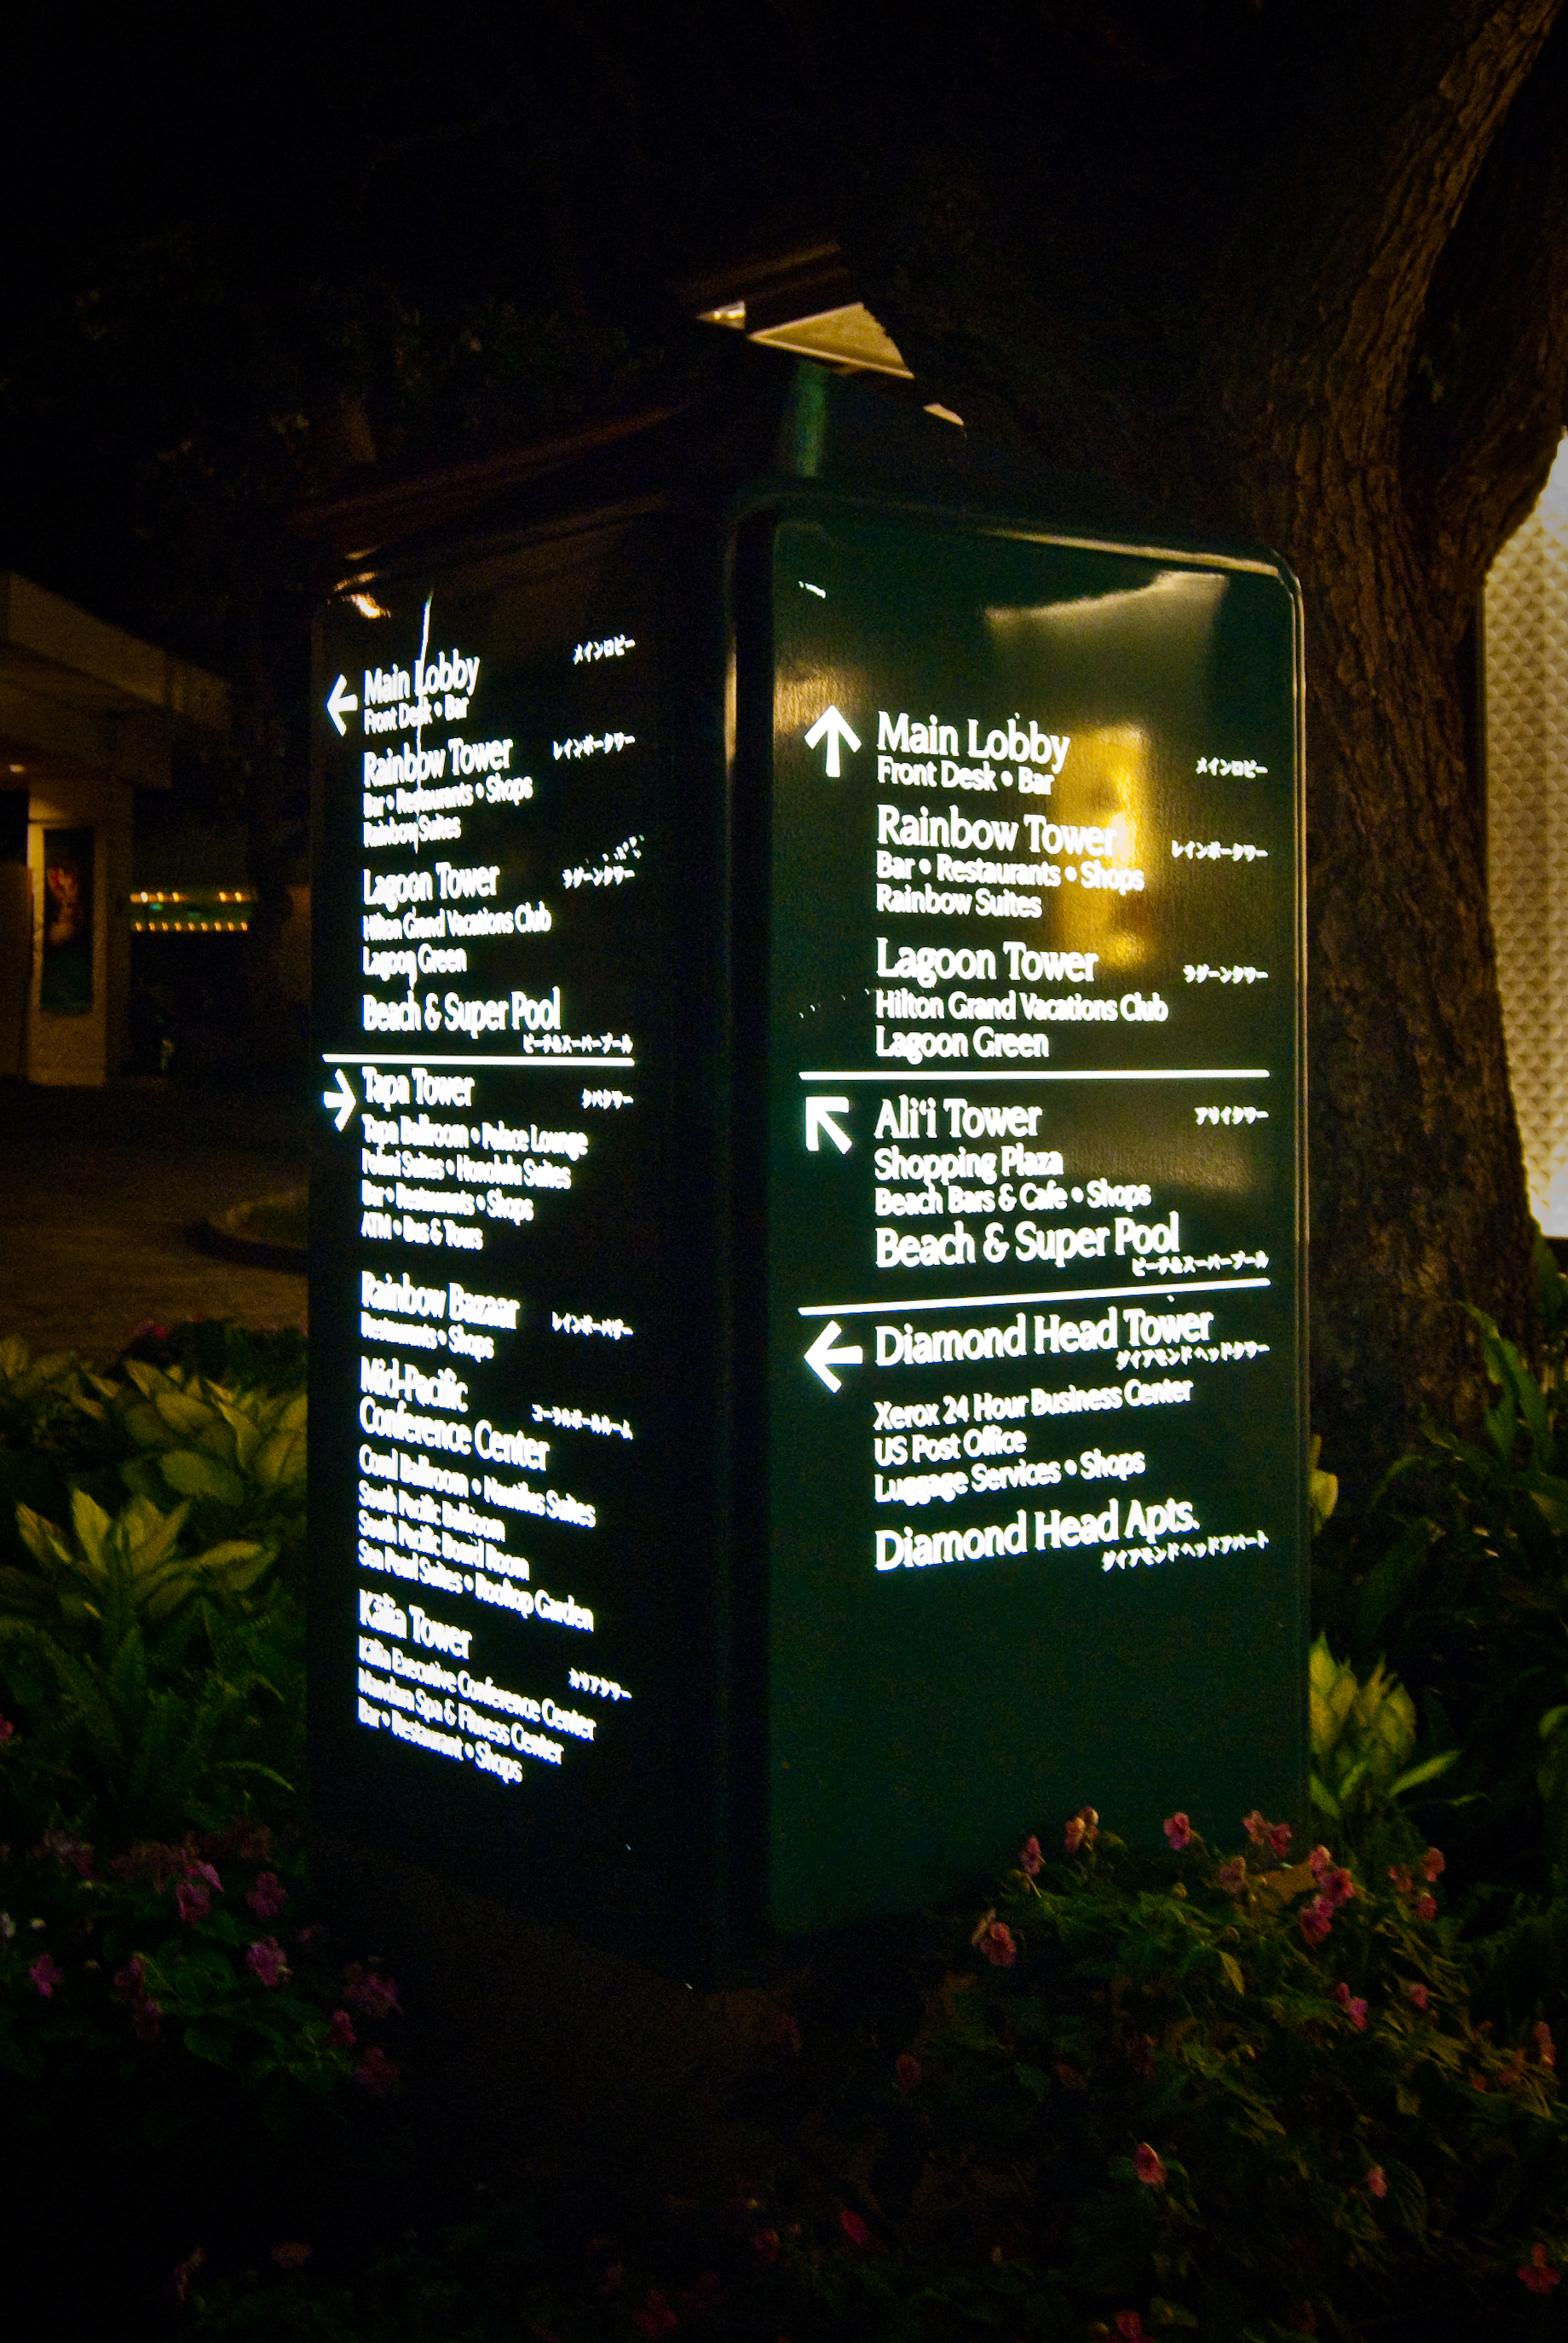 28-AUG-2013: So many places to go at the Hilton Hawaiian Village on Waikiki Beach.